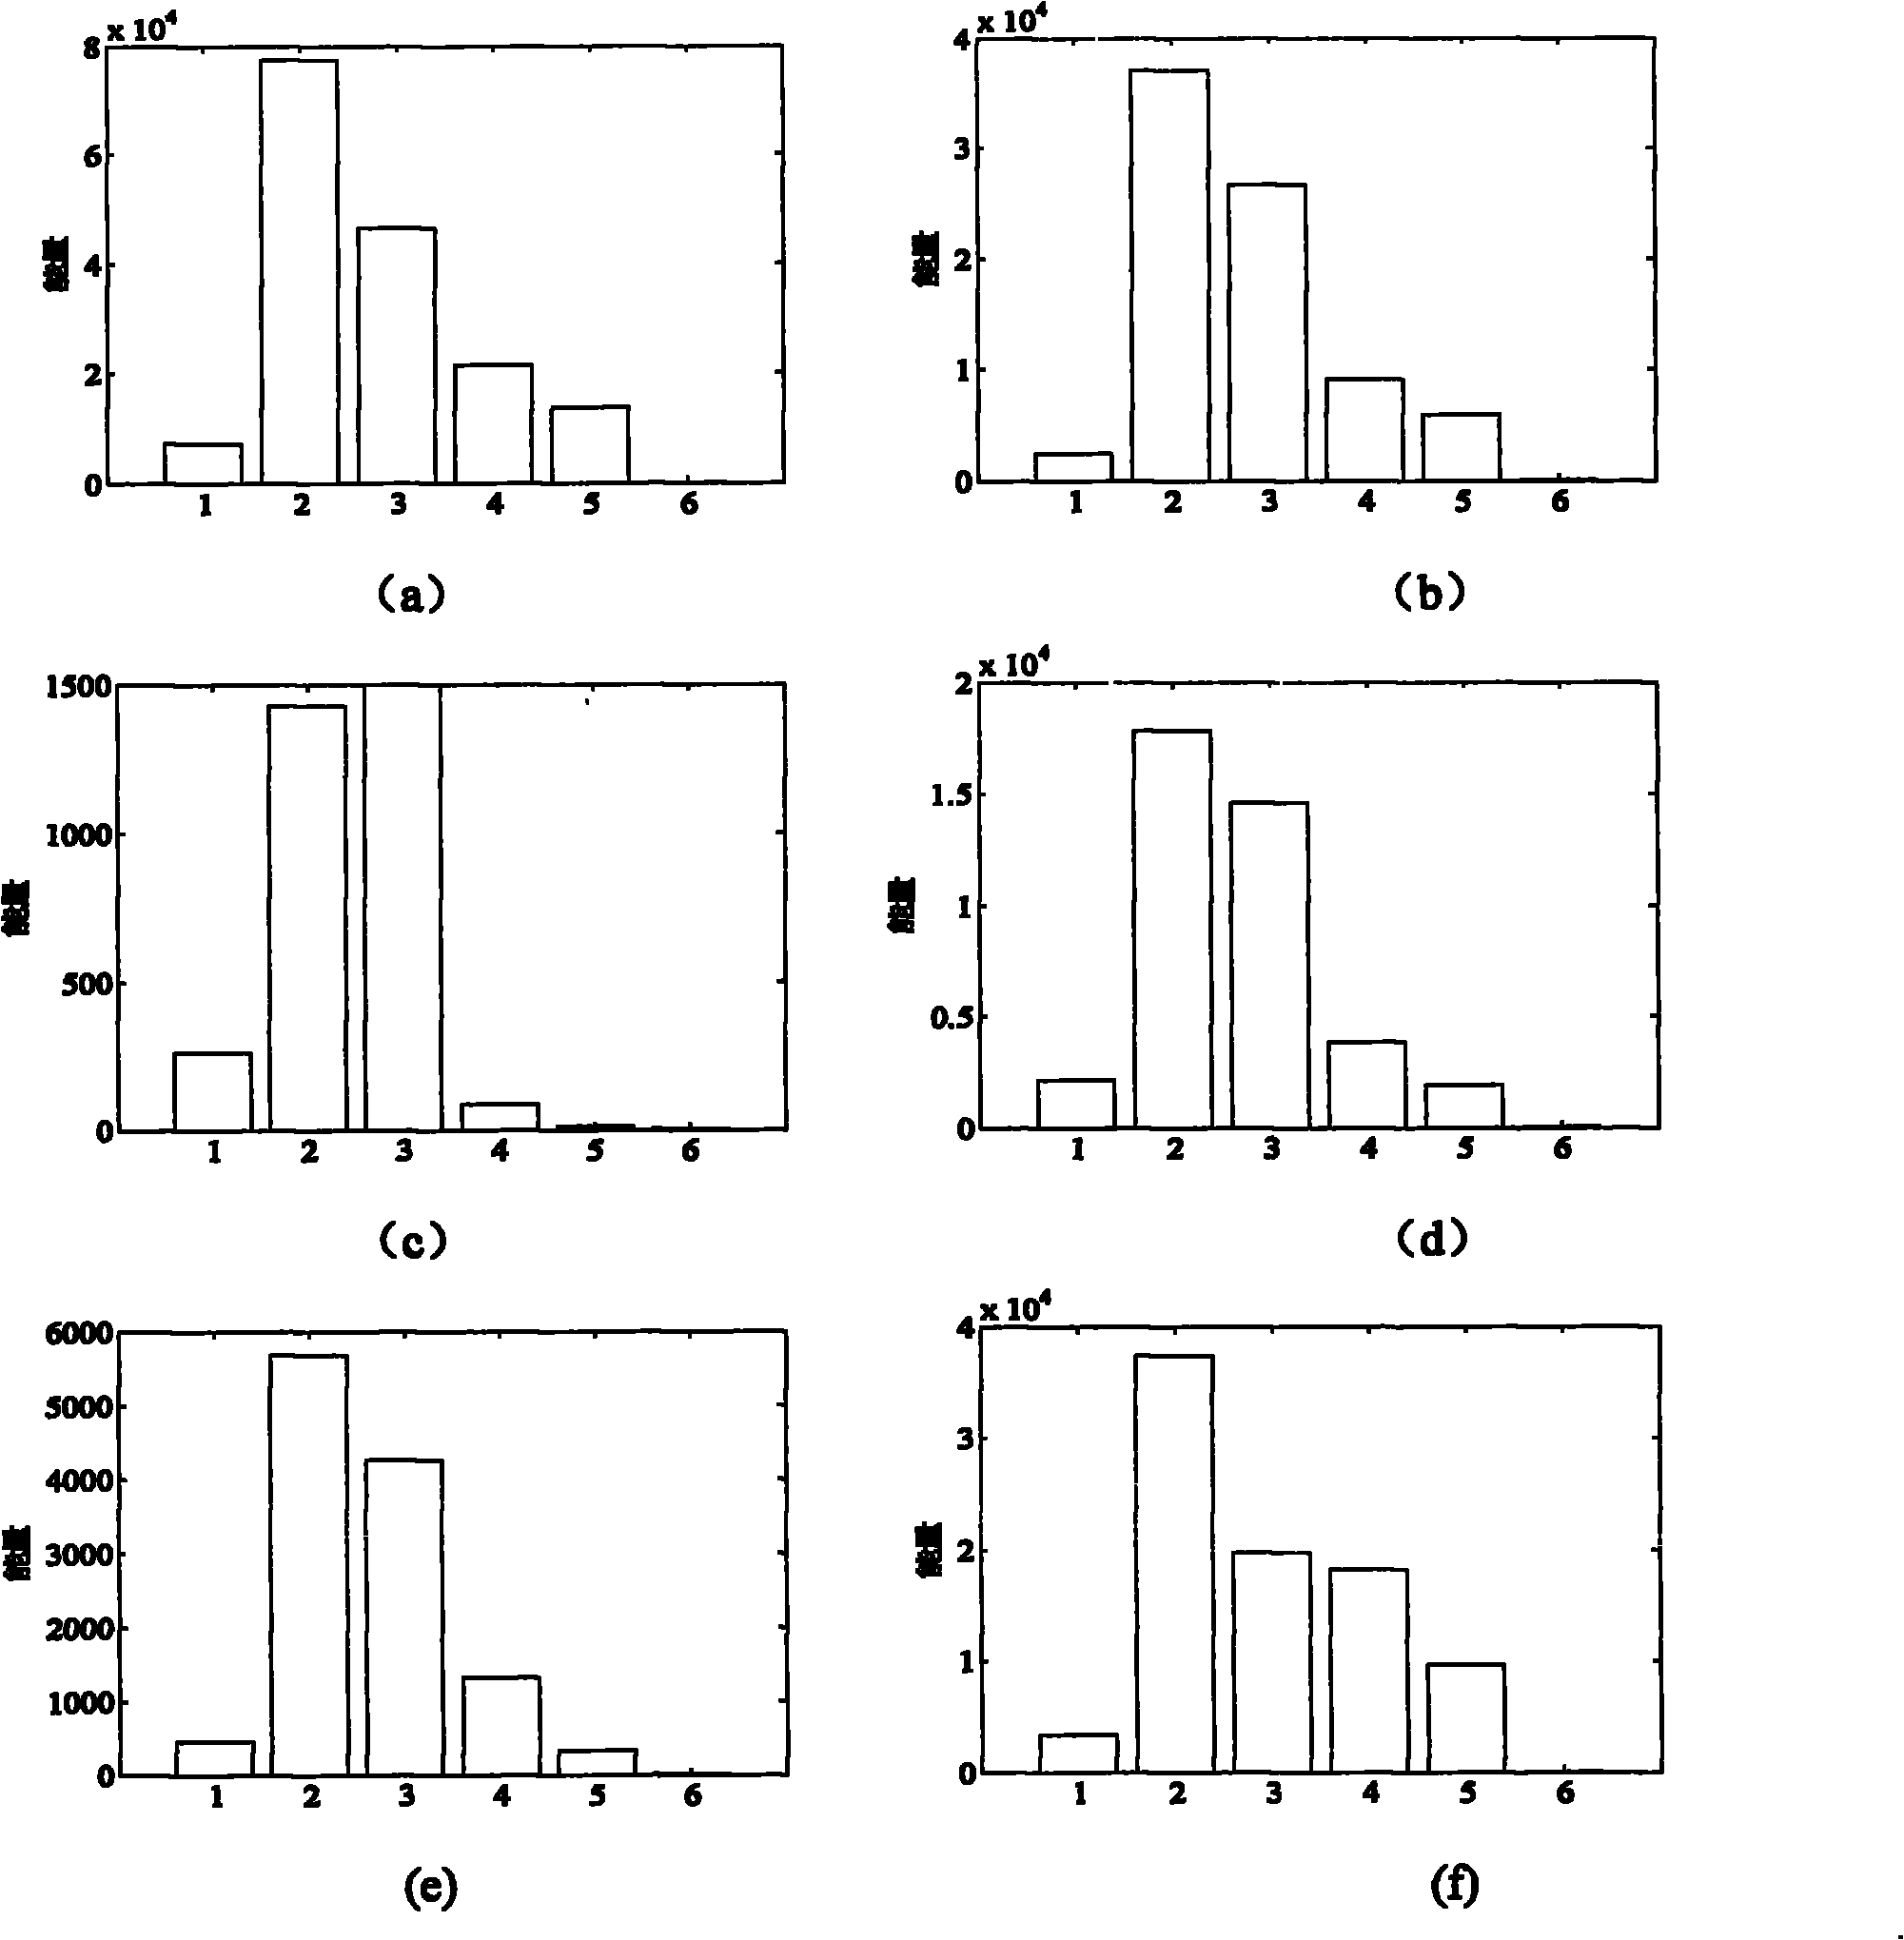 Fault line selection method of distribution network based on empirical mode decomposition (EMD)